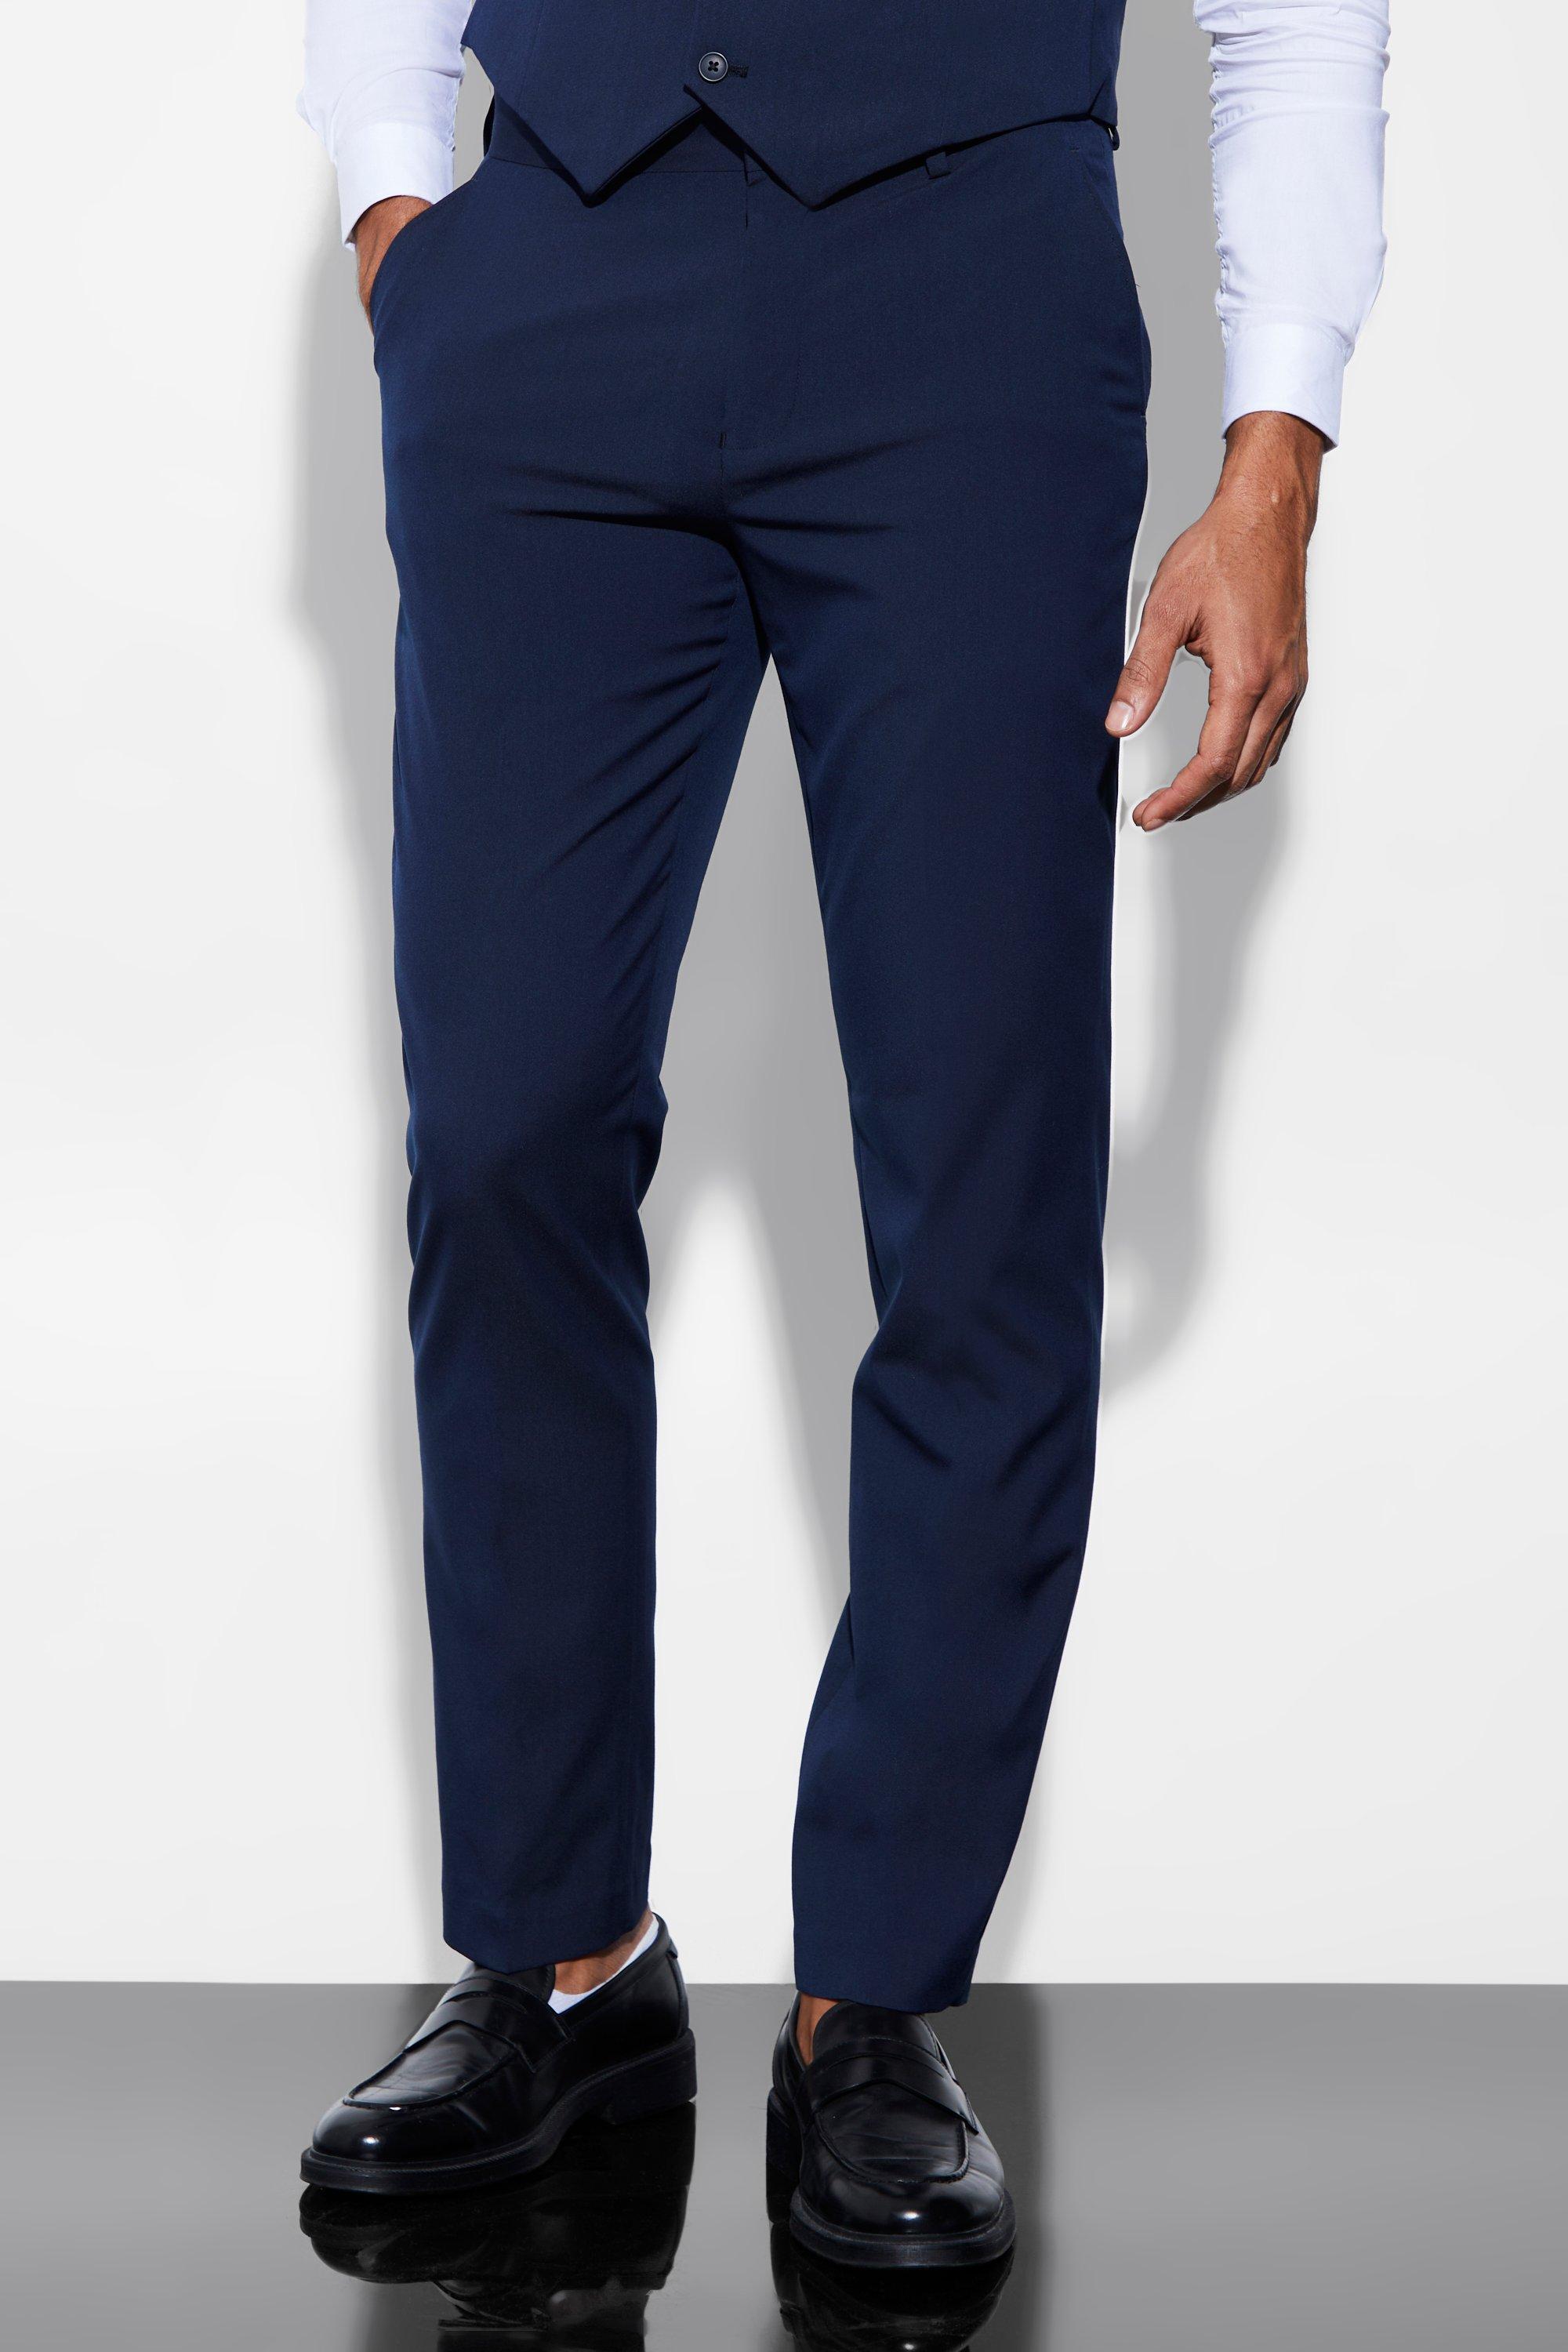 pantalon de costume slim homme - bleu - 36, bleu